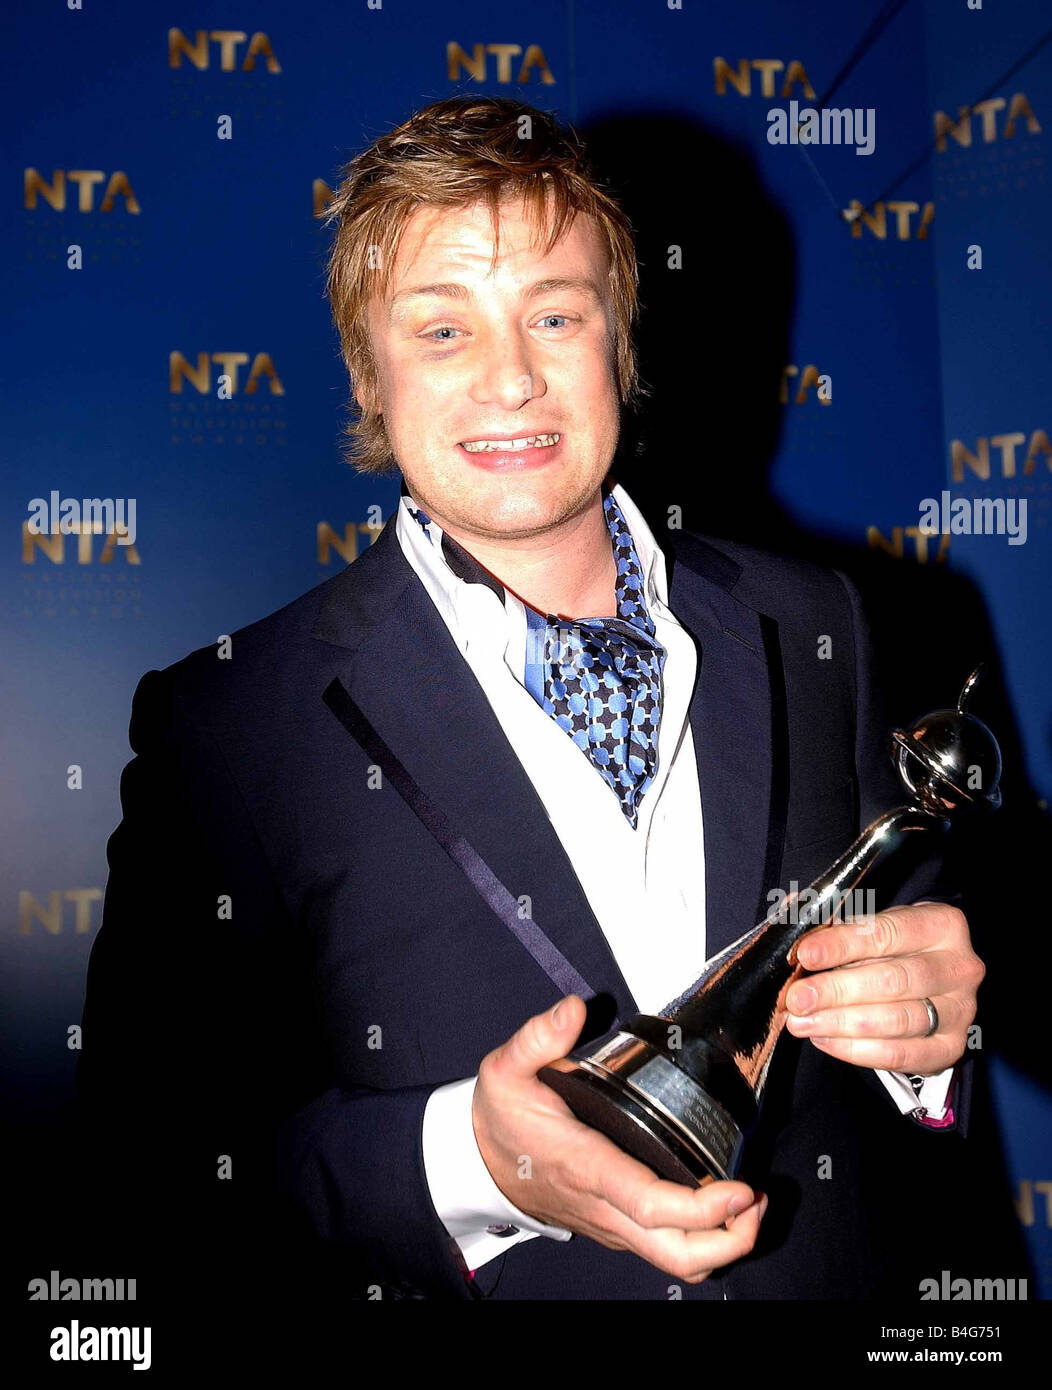 Jamie Oliver celebra il suo premio stasera al Royal Albert Hall per il National TV Awards Ottobre 2005 Foto Stock